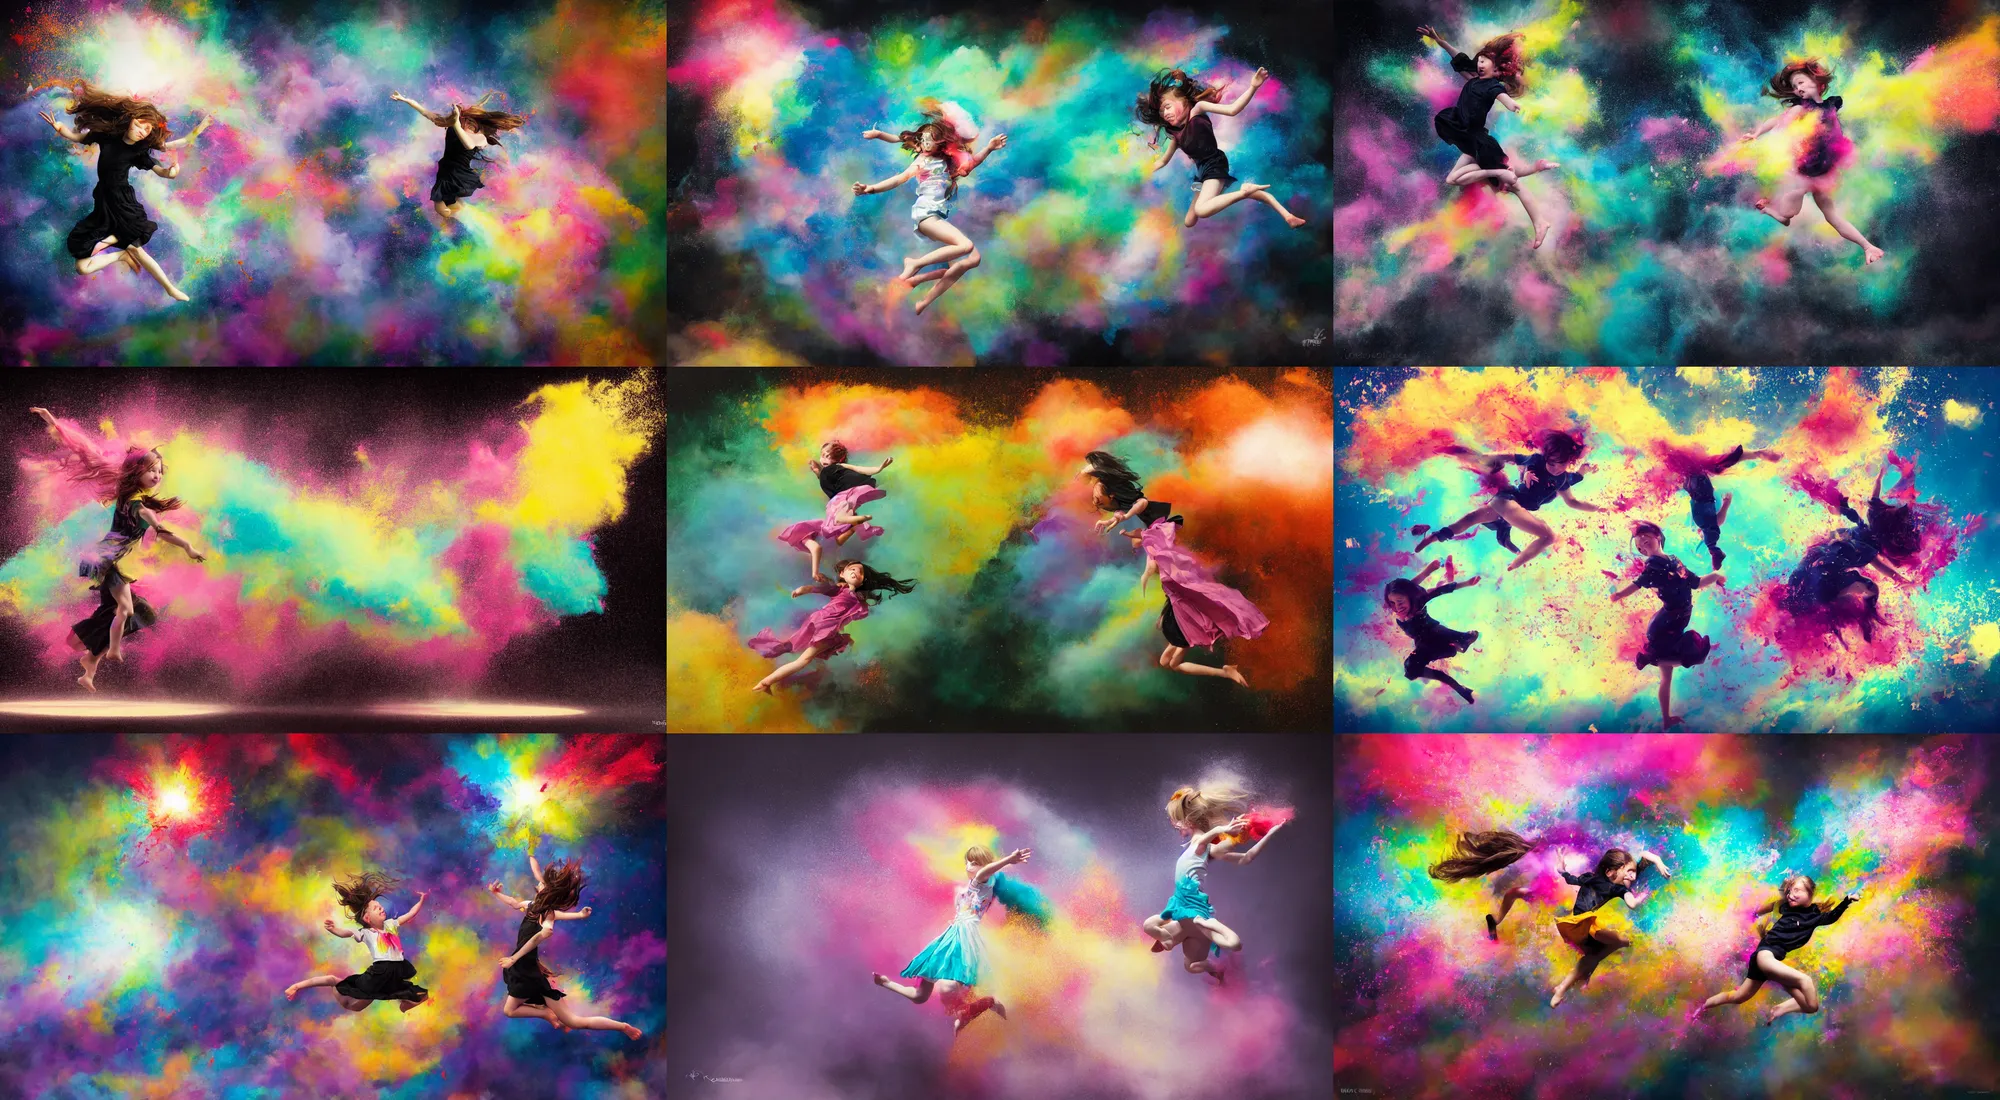 Prompt: a girl jumping through a centered explosion of colorful powder on a black background, wlop, steve argyle, ilya kuvshinov, ralph horsley, rossdraw, mark ryden, daniel f. gerhartz, sophie anderson, lilia alvarado, tom chambers